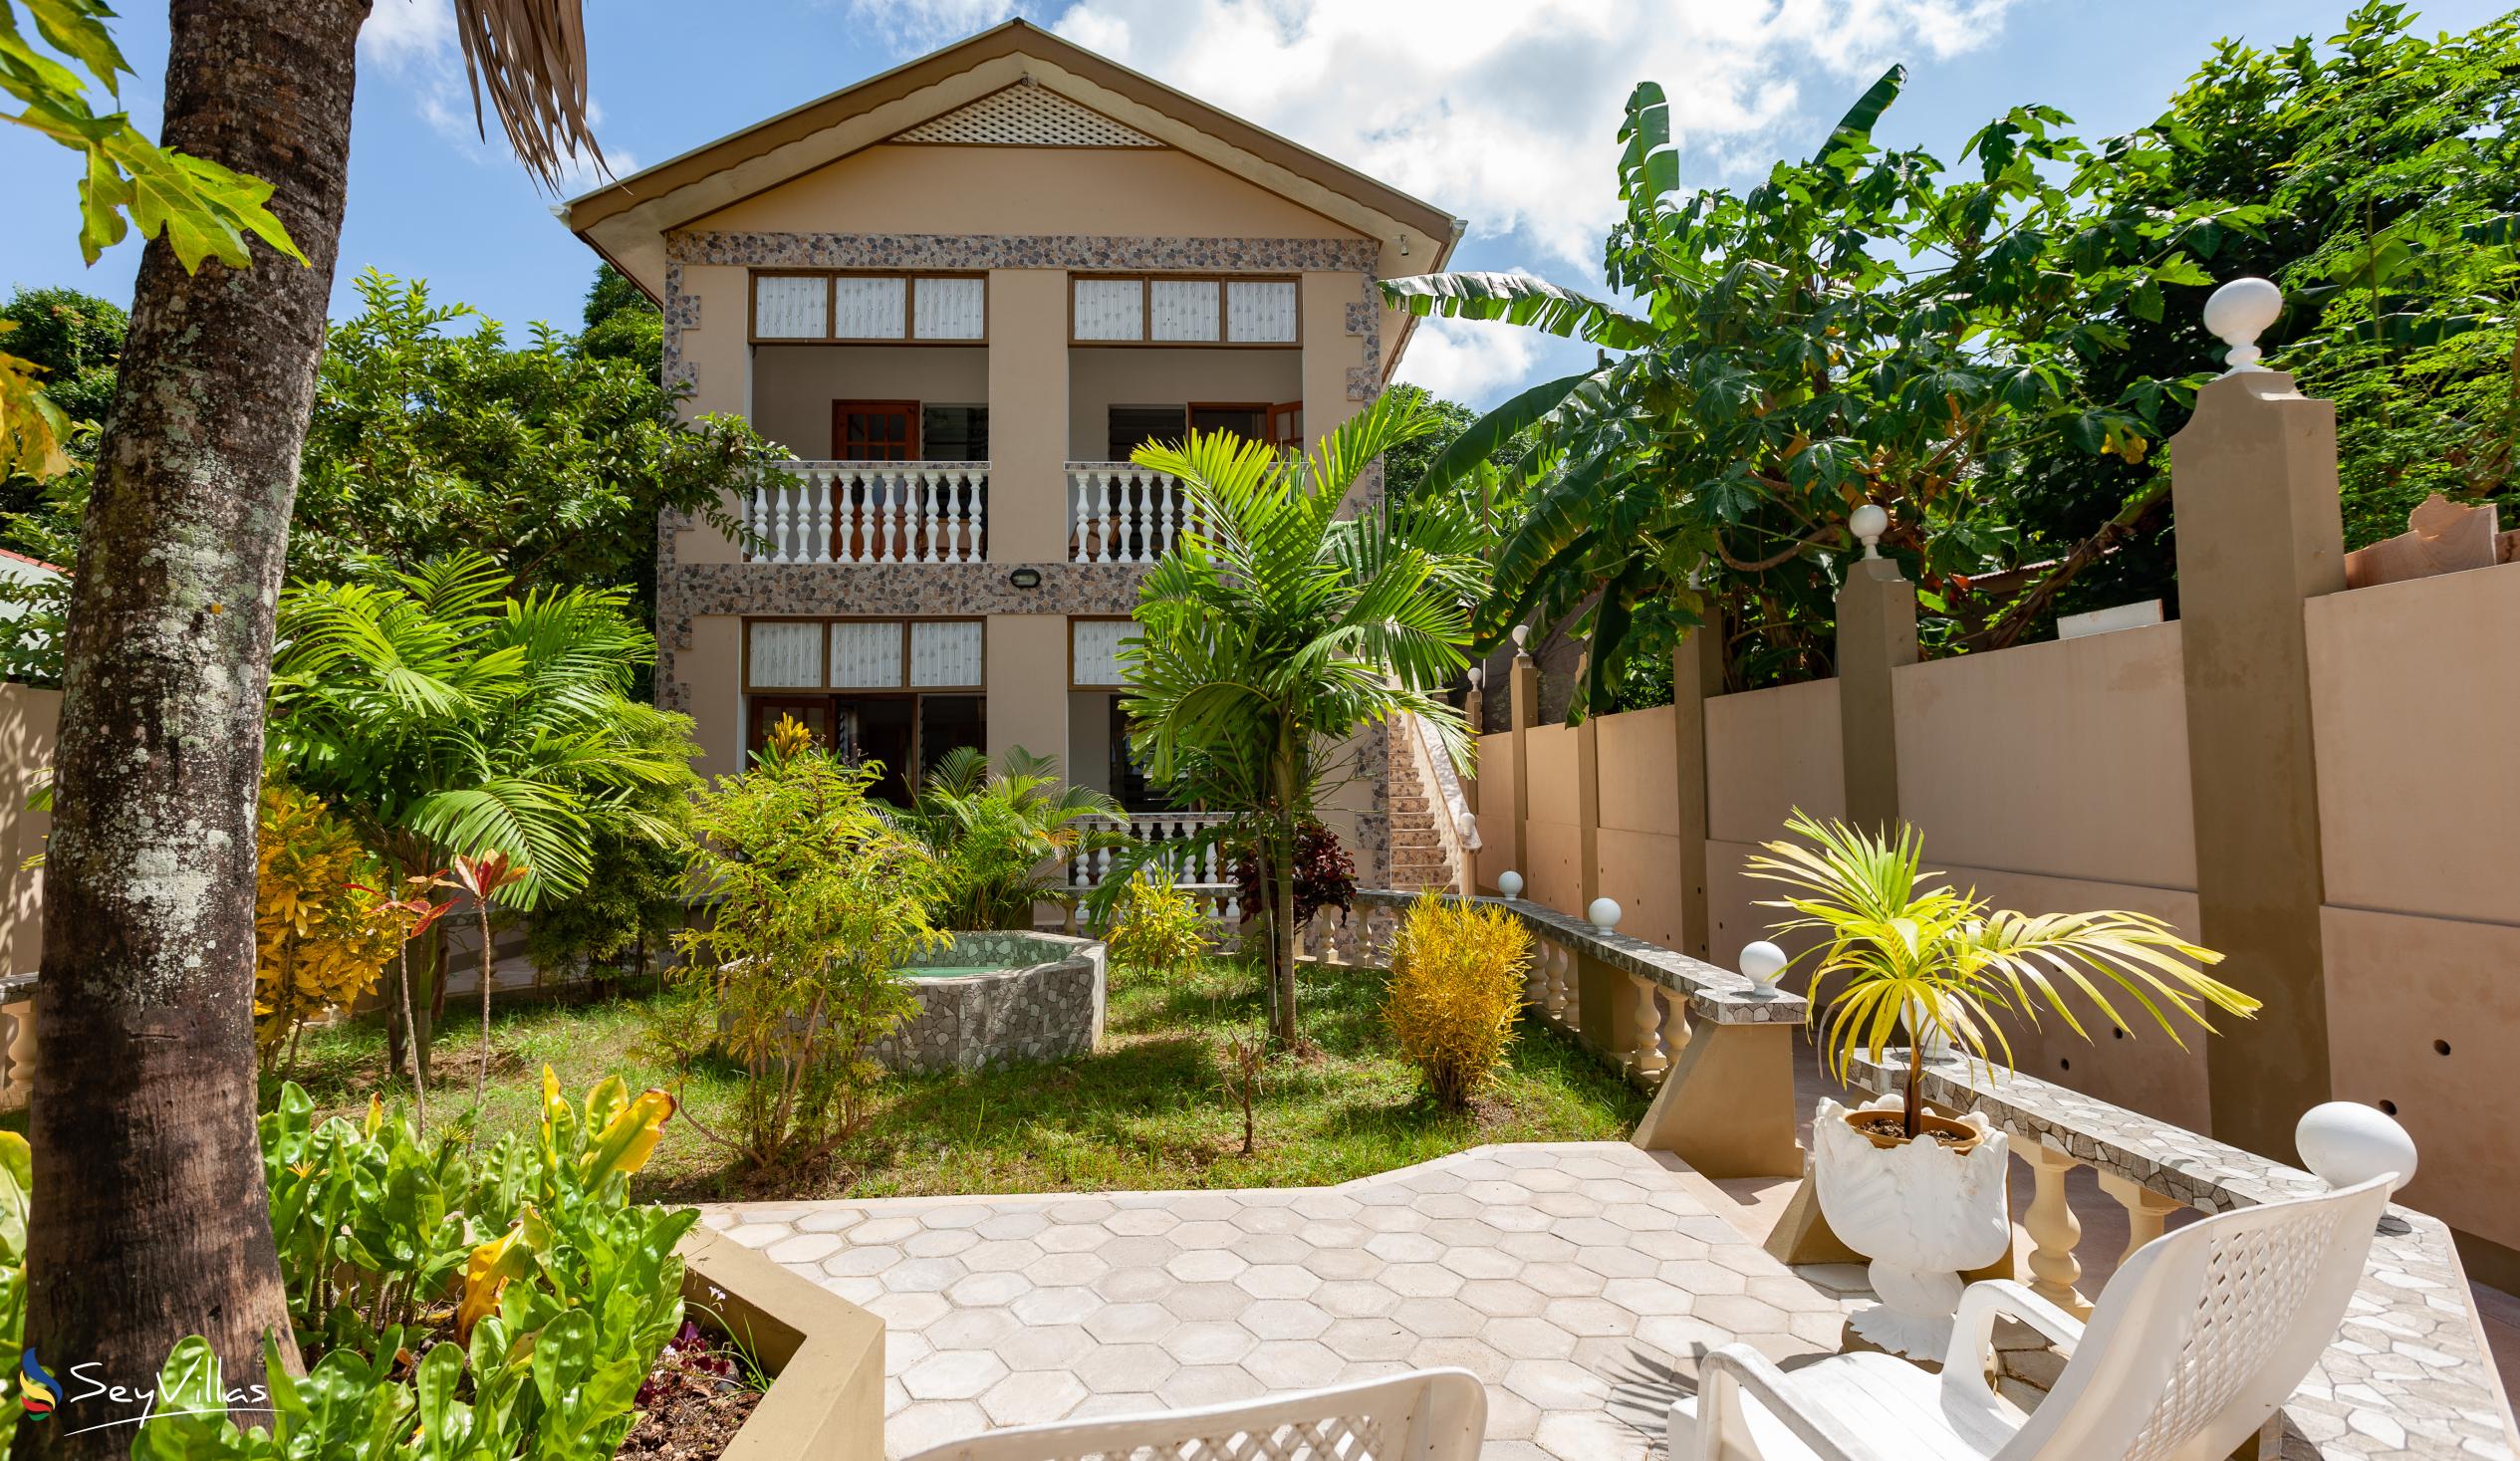 Photo 3: La Residence d'Almee - Outdoor area - Praslin (Seychelles)